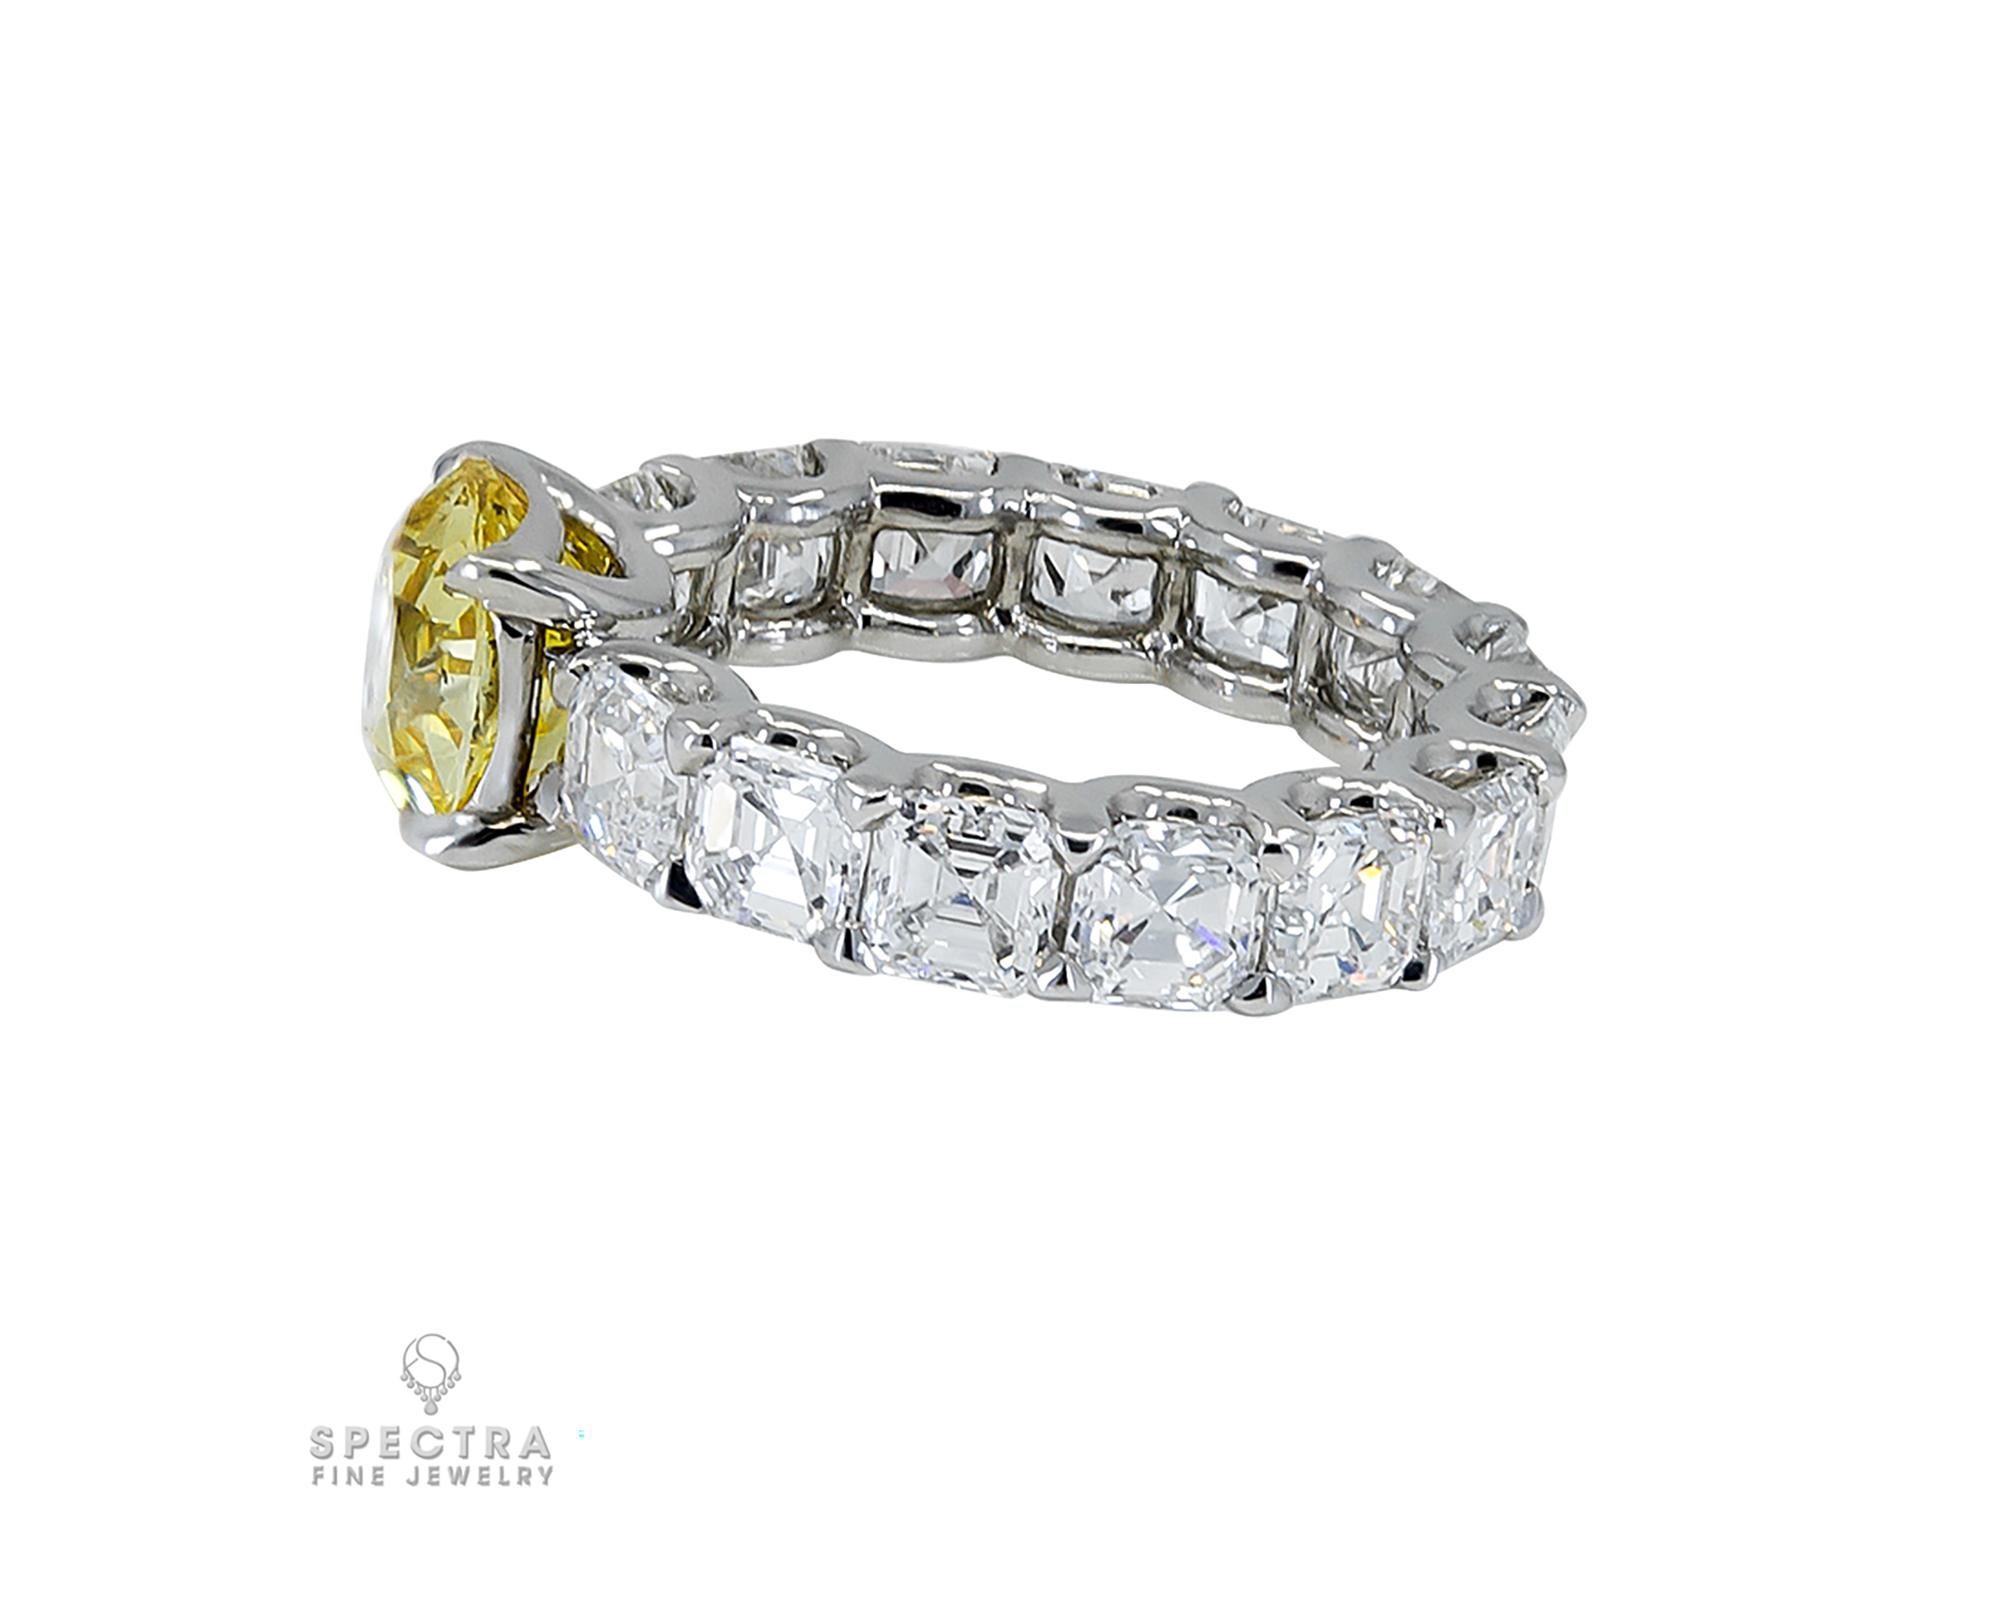 Radiant Cut Spectra Fine Jewelry GIA Certified 3.02 Carat Fancy Vivid Yellow Diamond Ring For Sale